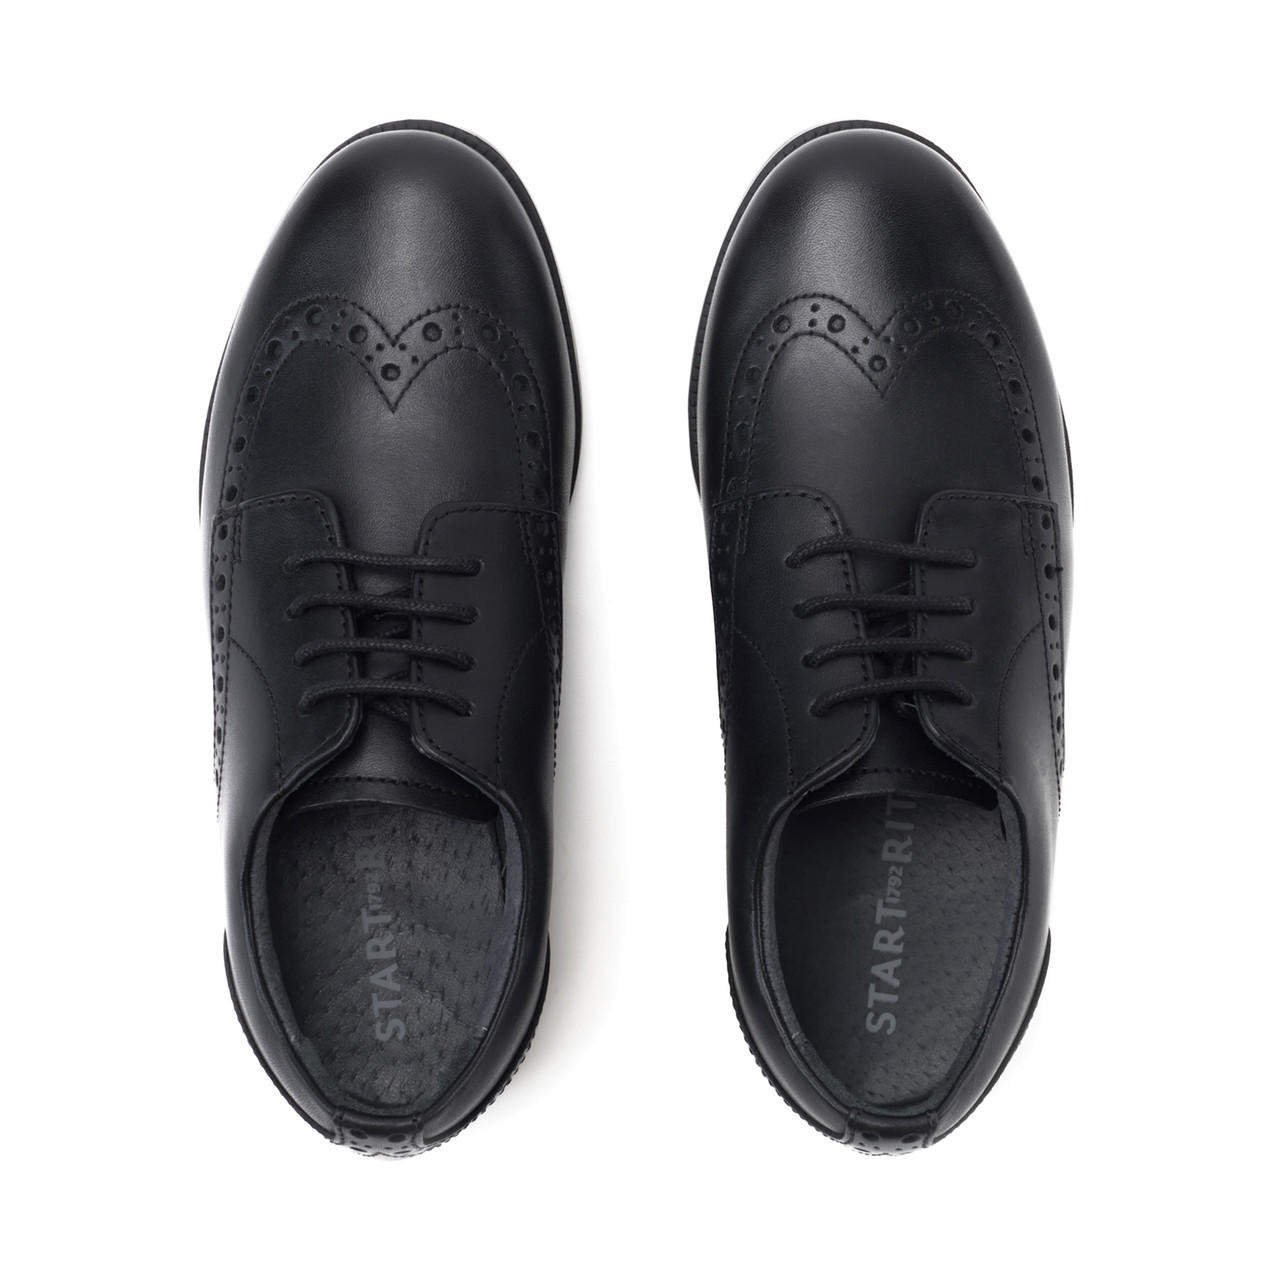 Brogue Pri, Black leather lace-up school shoes - Start-Rite